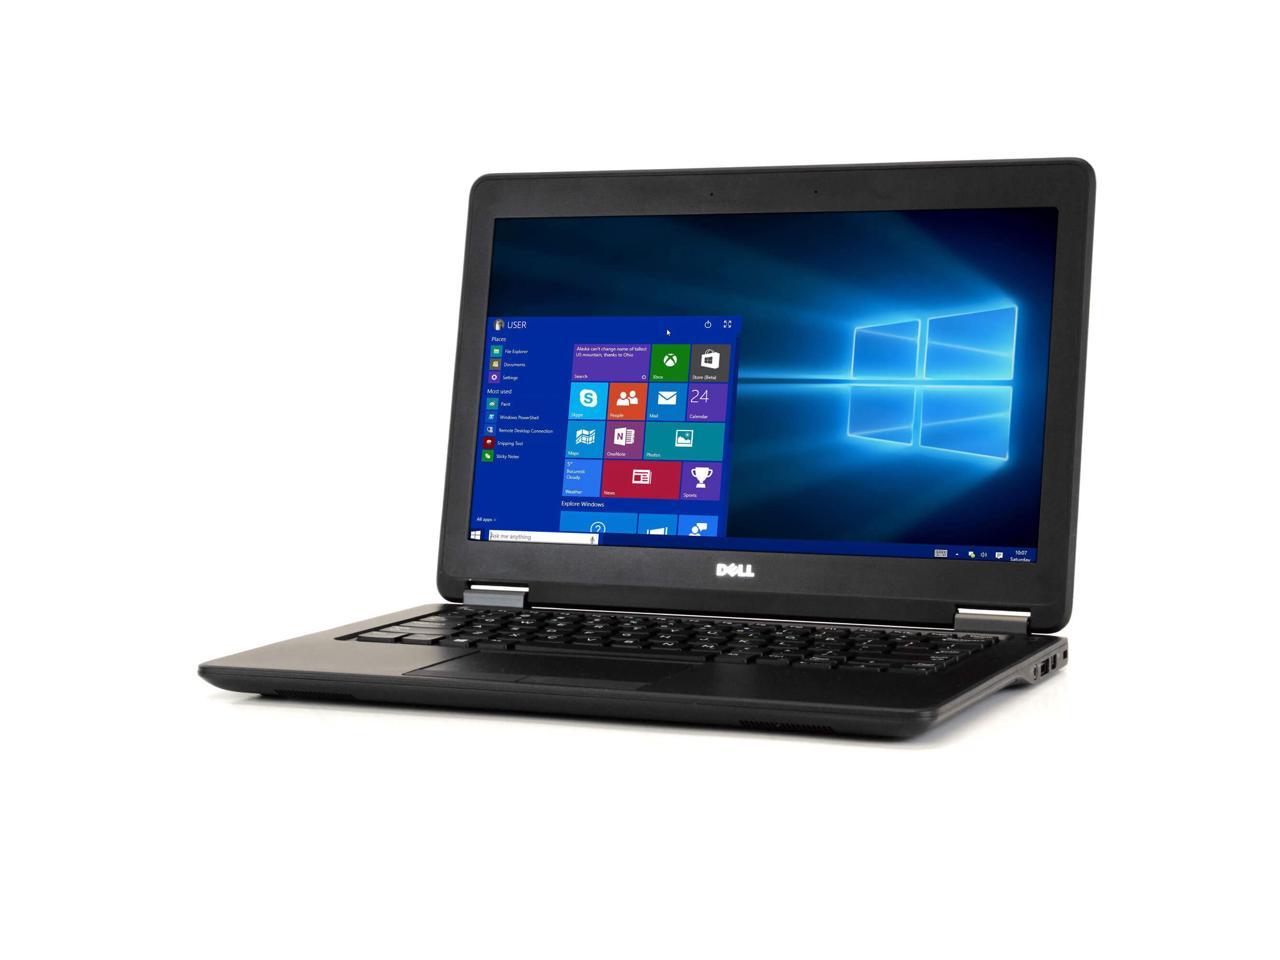 Dell Latitude E7250 Laptop Computer, 2.90 GHz Intel i7 Dual Core Gen 5, 8GB DDR3 RAM, 256GB SSD Hard Drive, Windows 10 Professional 64 Bit, 12" Screen